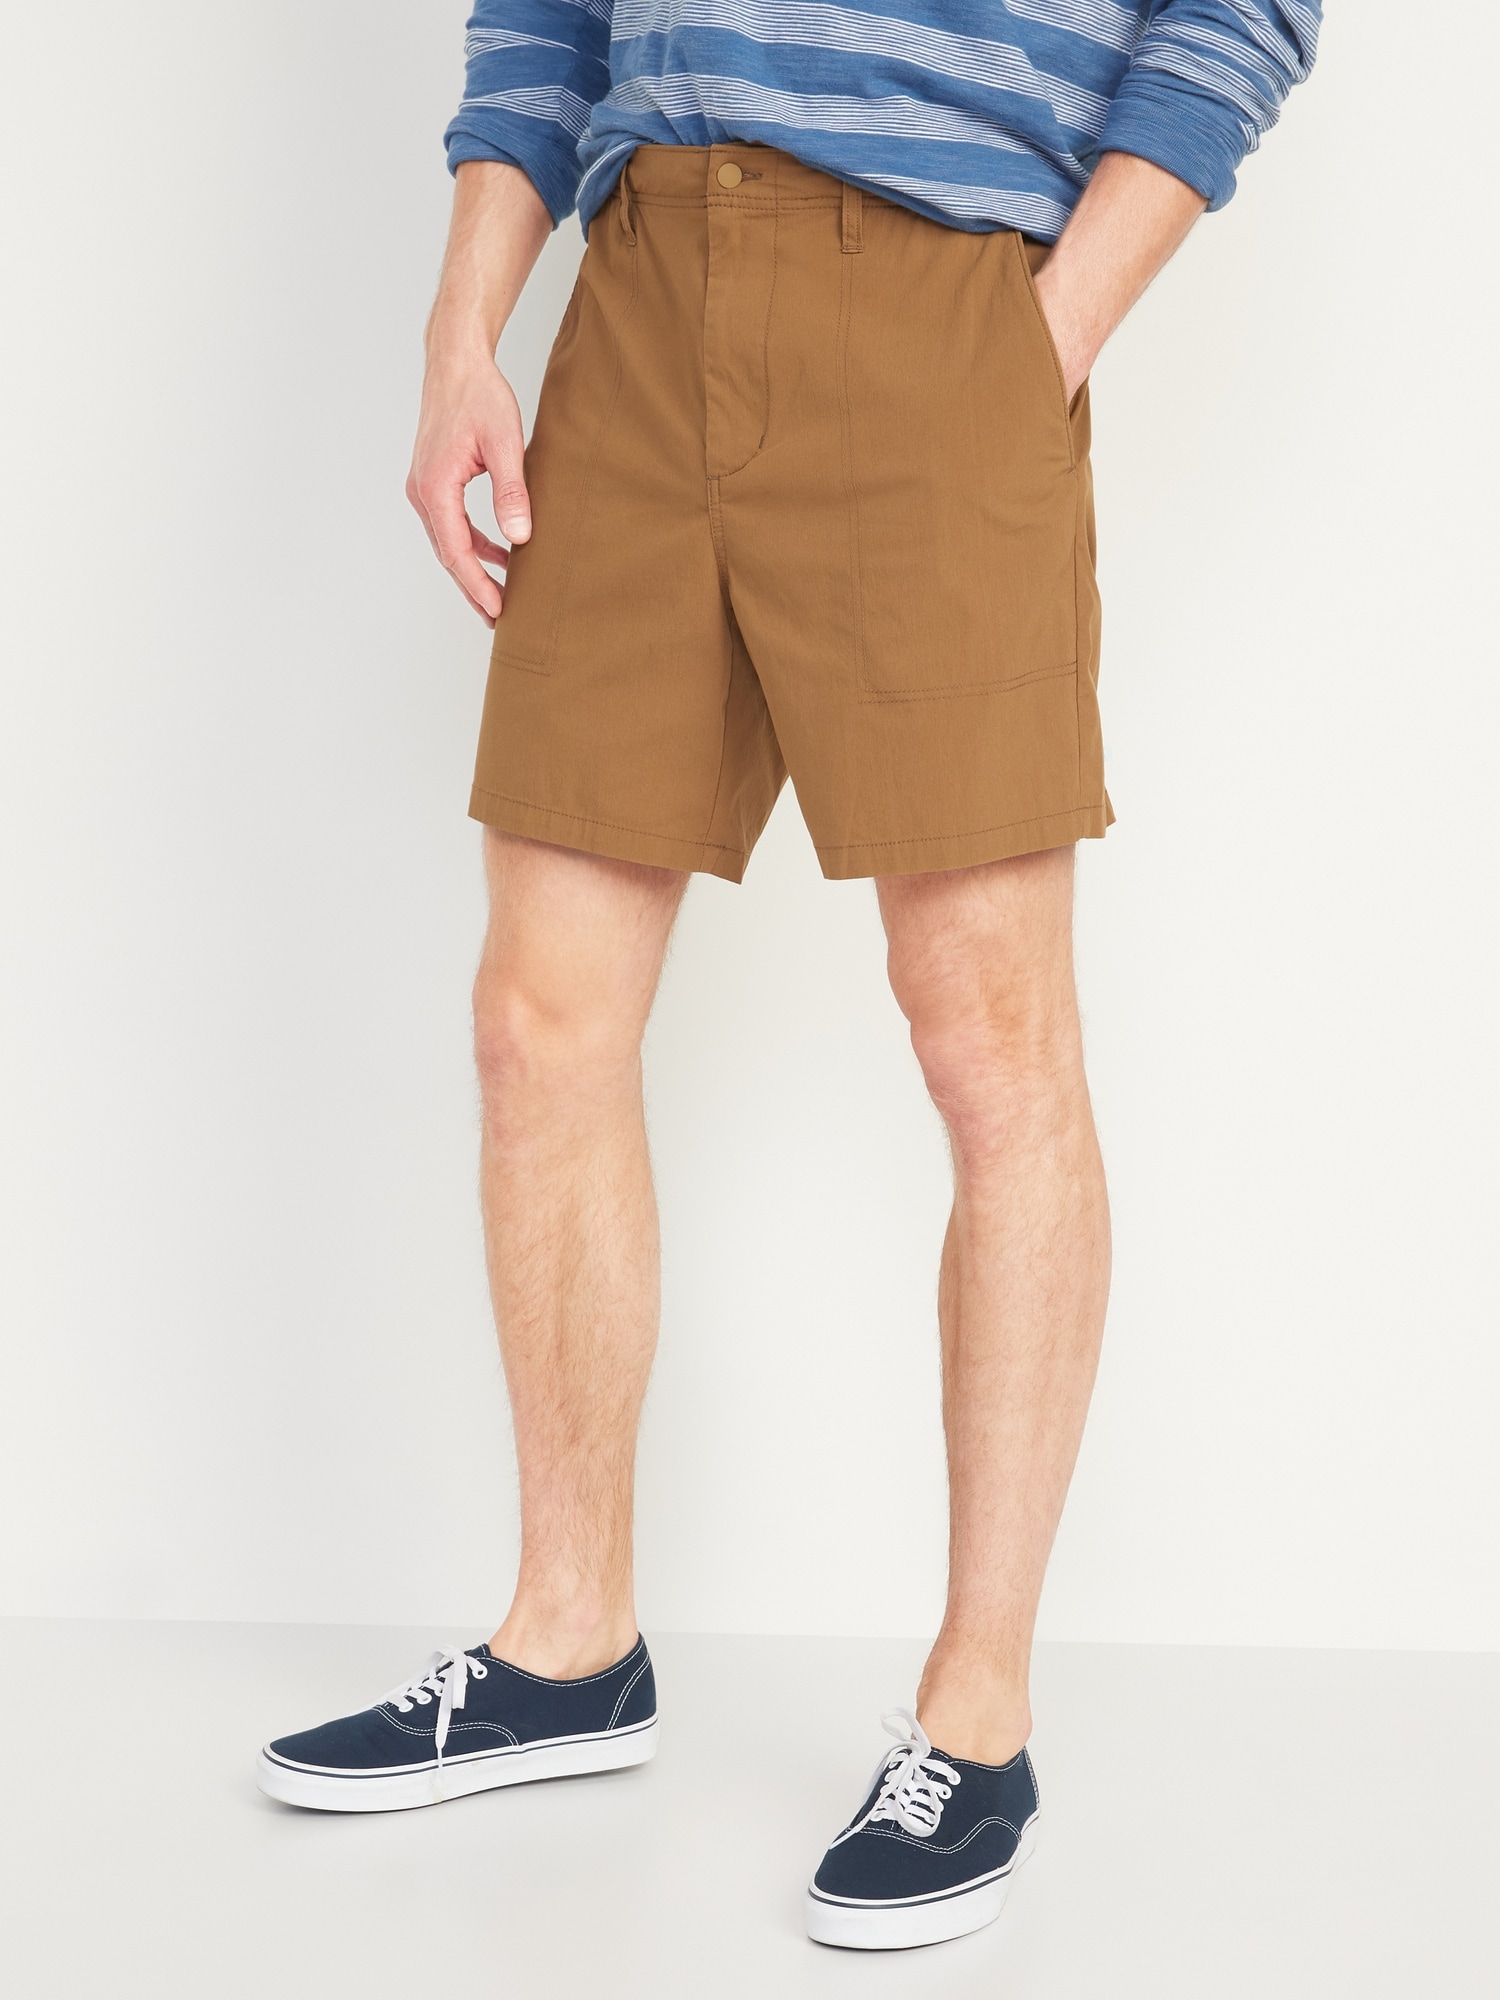 Old Navy Hybrid Tech Chino Shorts for Men -- 7-inch inseam brown. 1